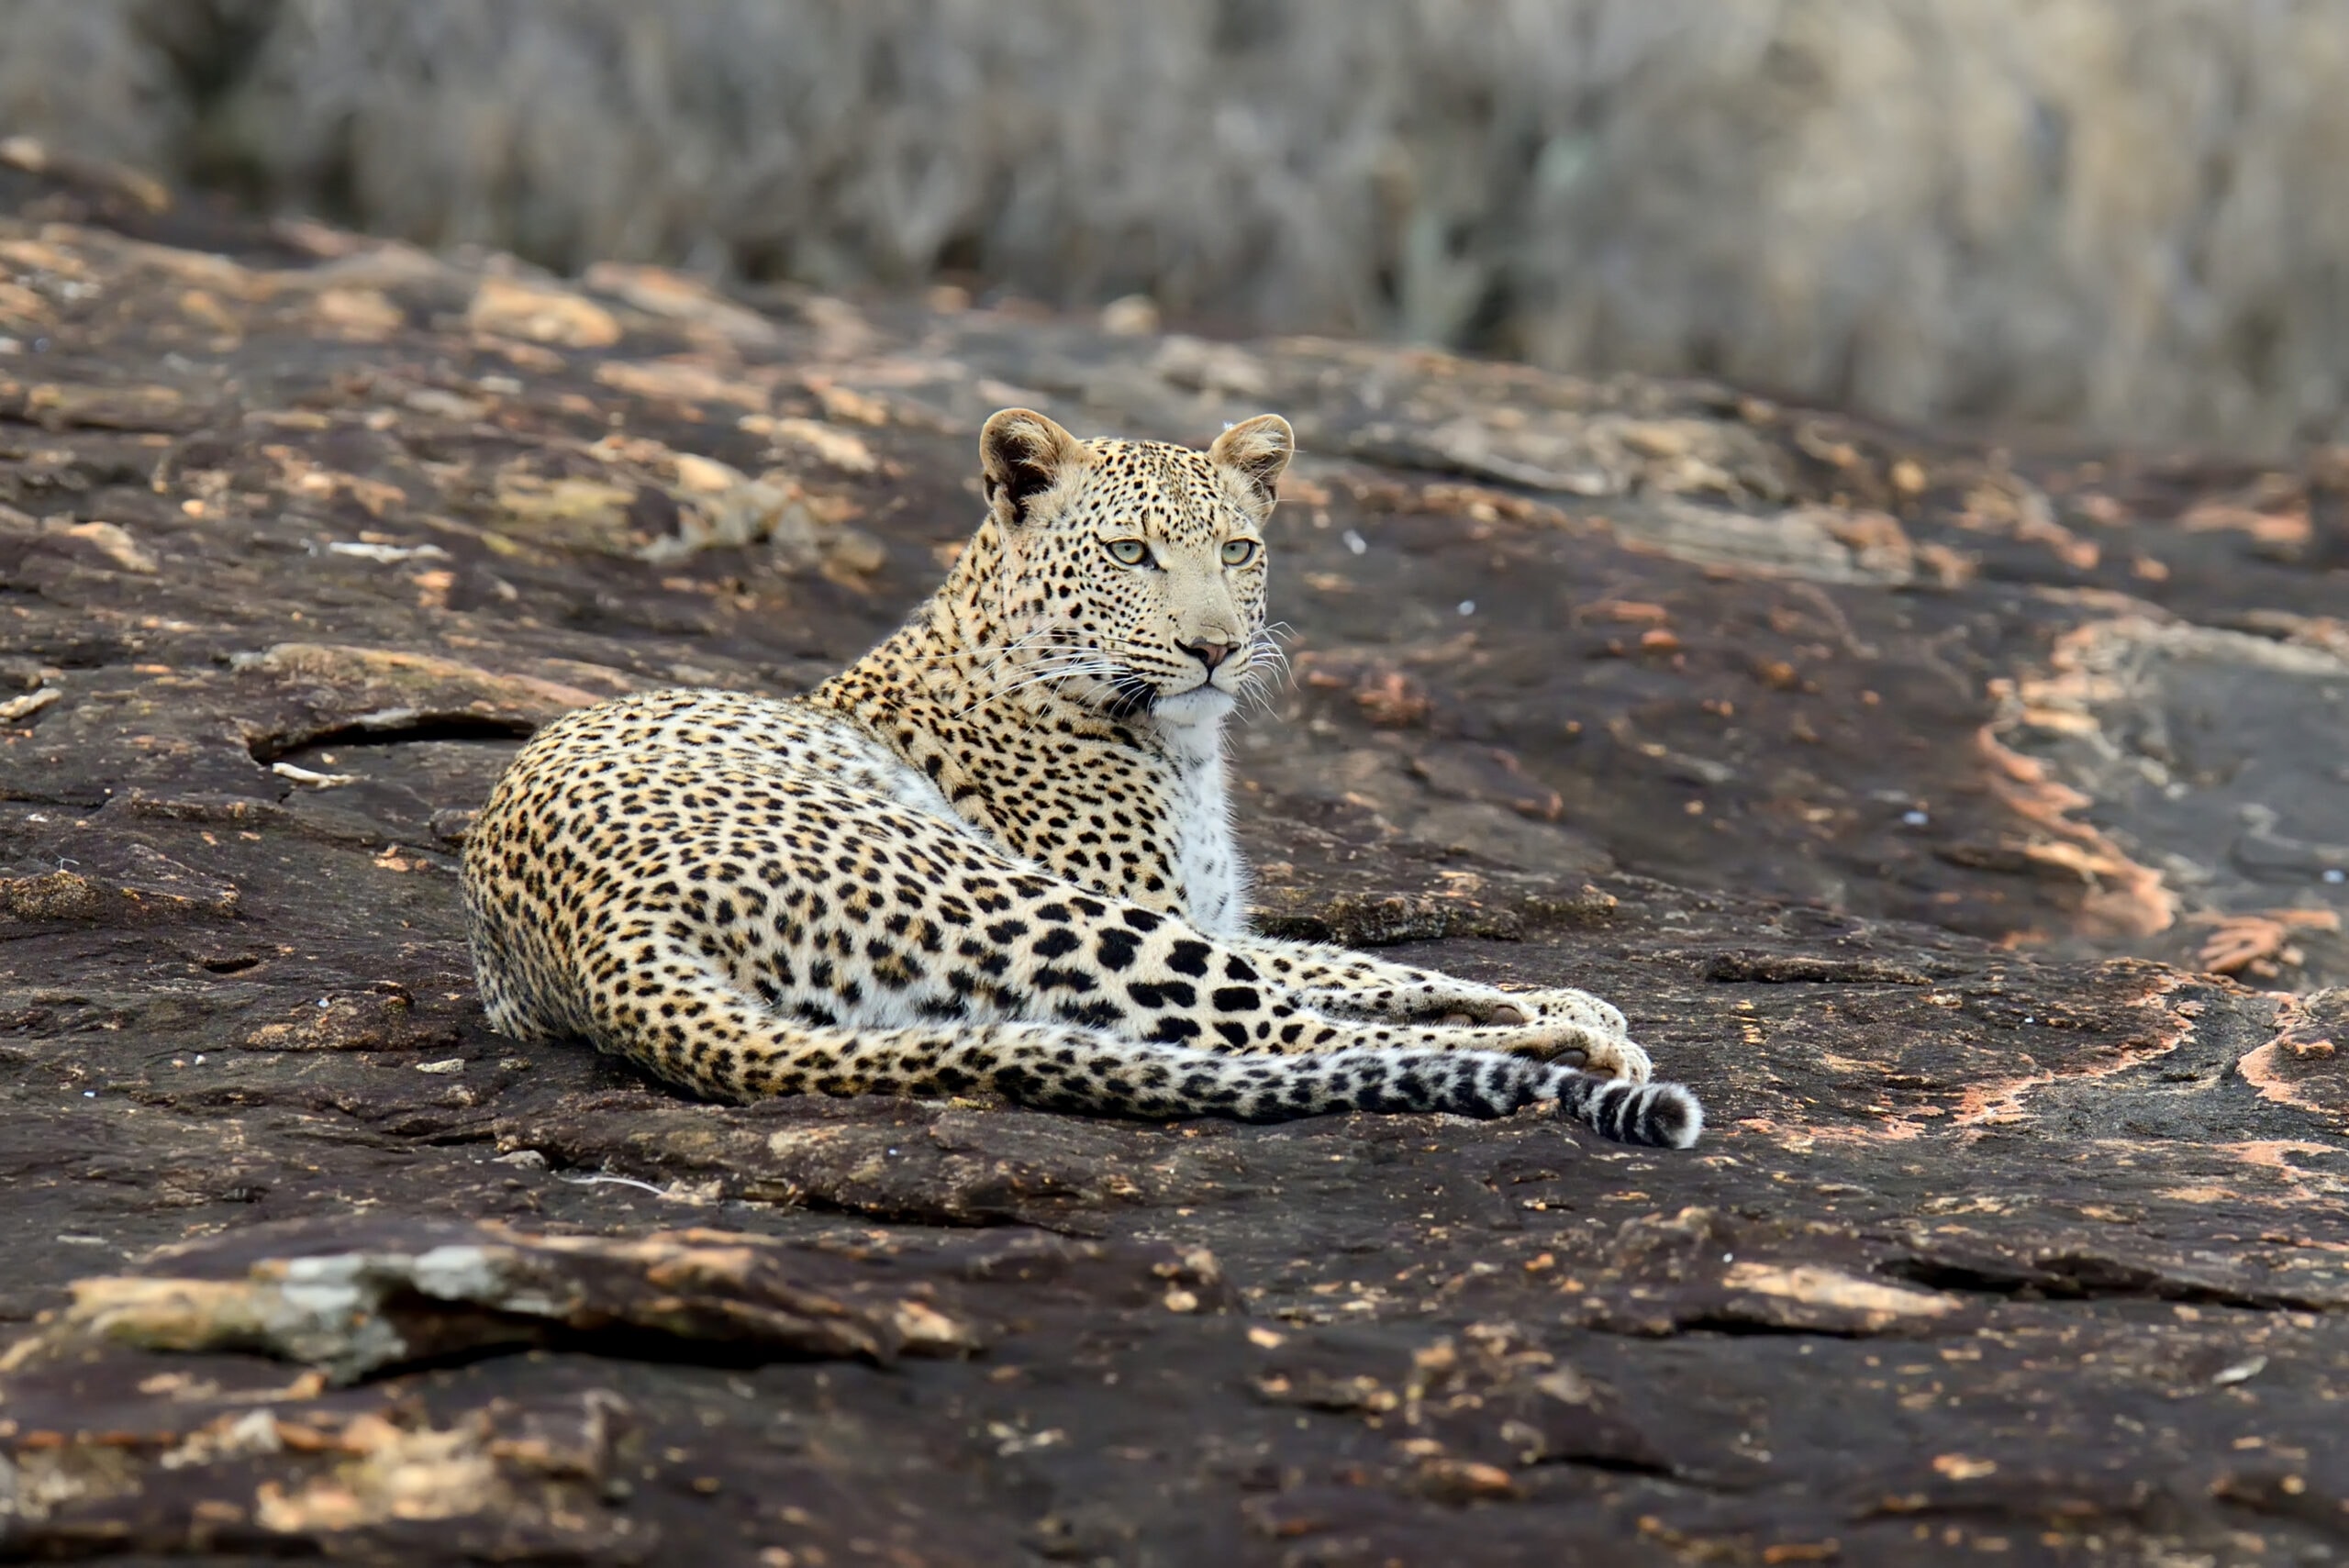 leopard in national park of kenya 2021 08 26 15 55 43 utc scaled